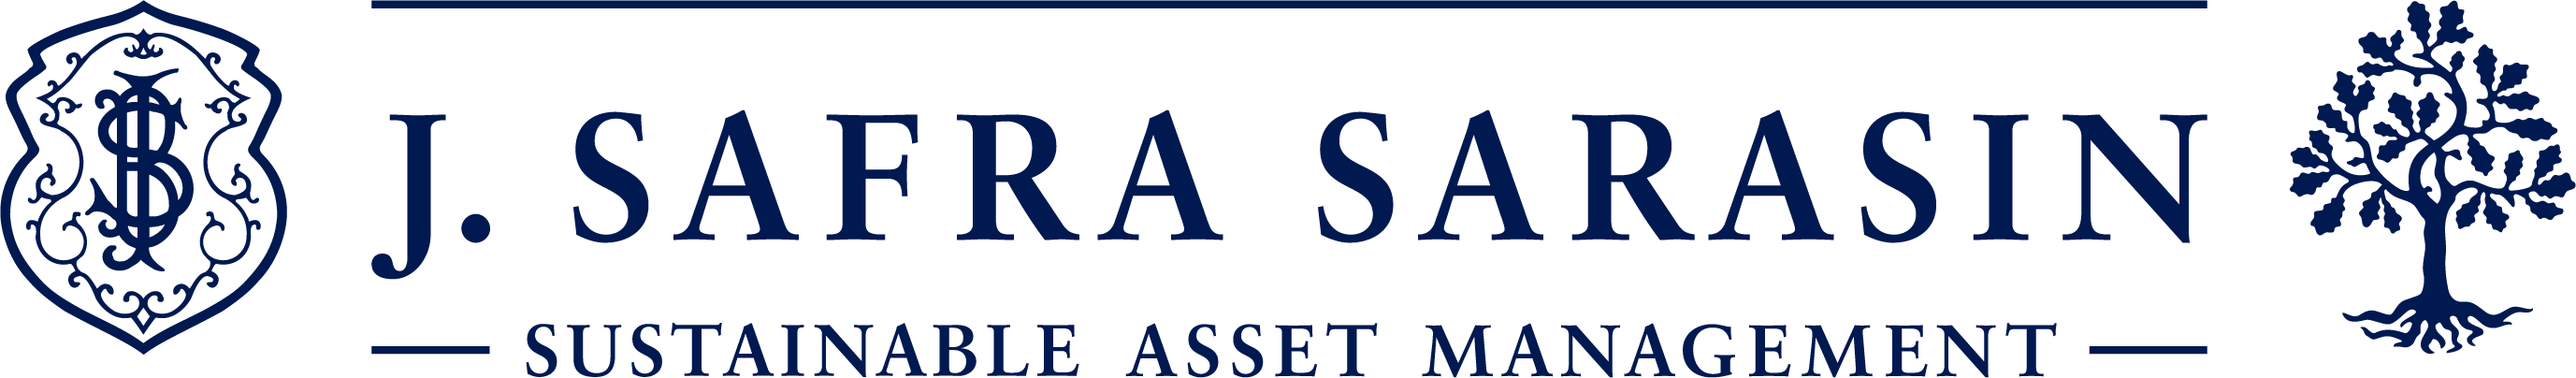 Logo J. Safra Sarasin Sustainable Asset Management